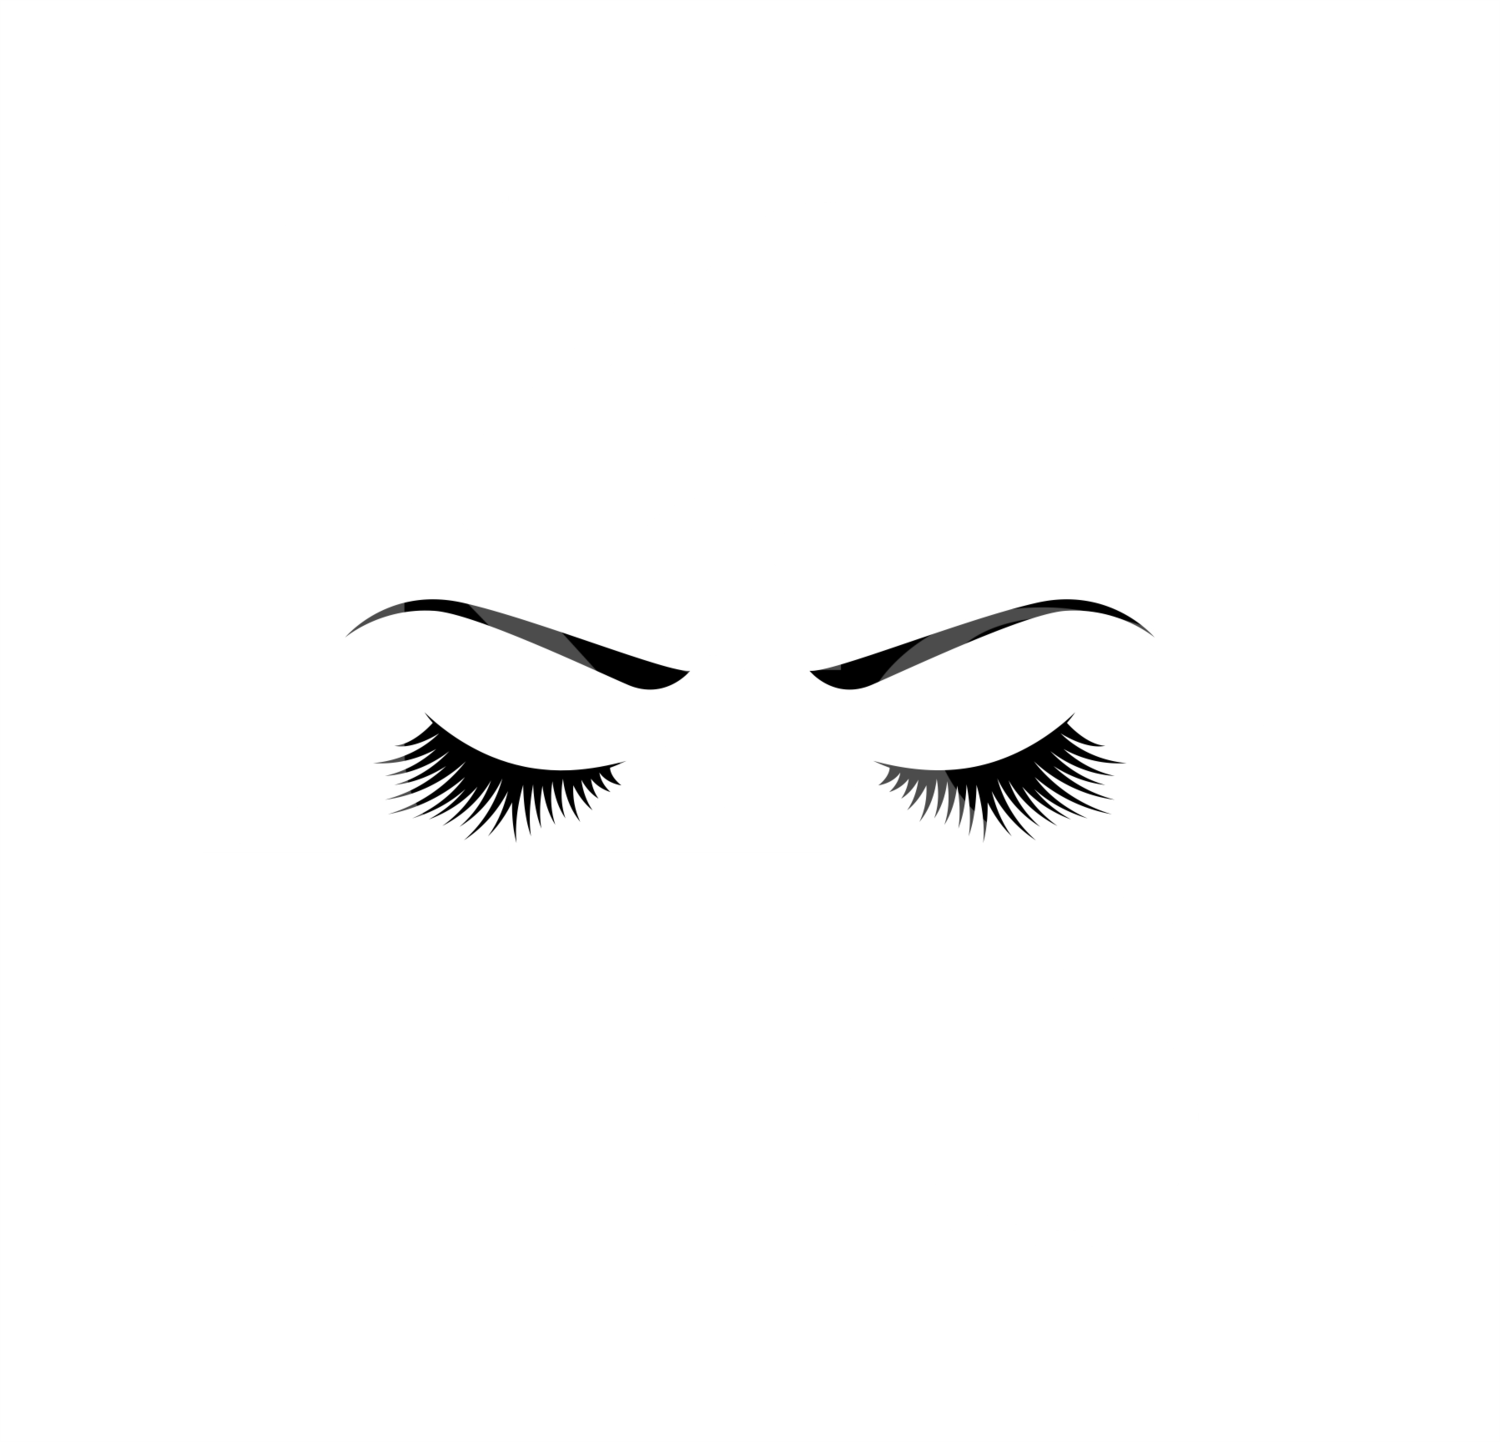 Eyelashes SVG Cut File, PNG, DXF File, Custom Eyelashes Svg, Beautiful Eyelashes Svg, Women Eyelashes for Custom Designs, Girl Power, Cute